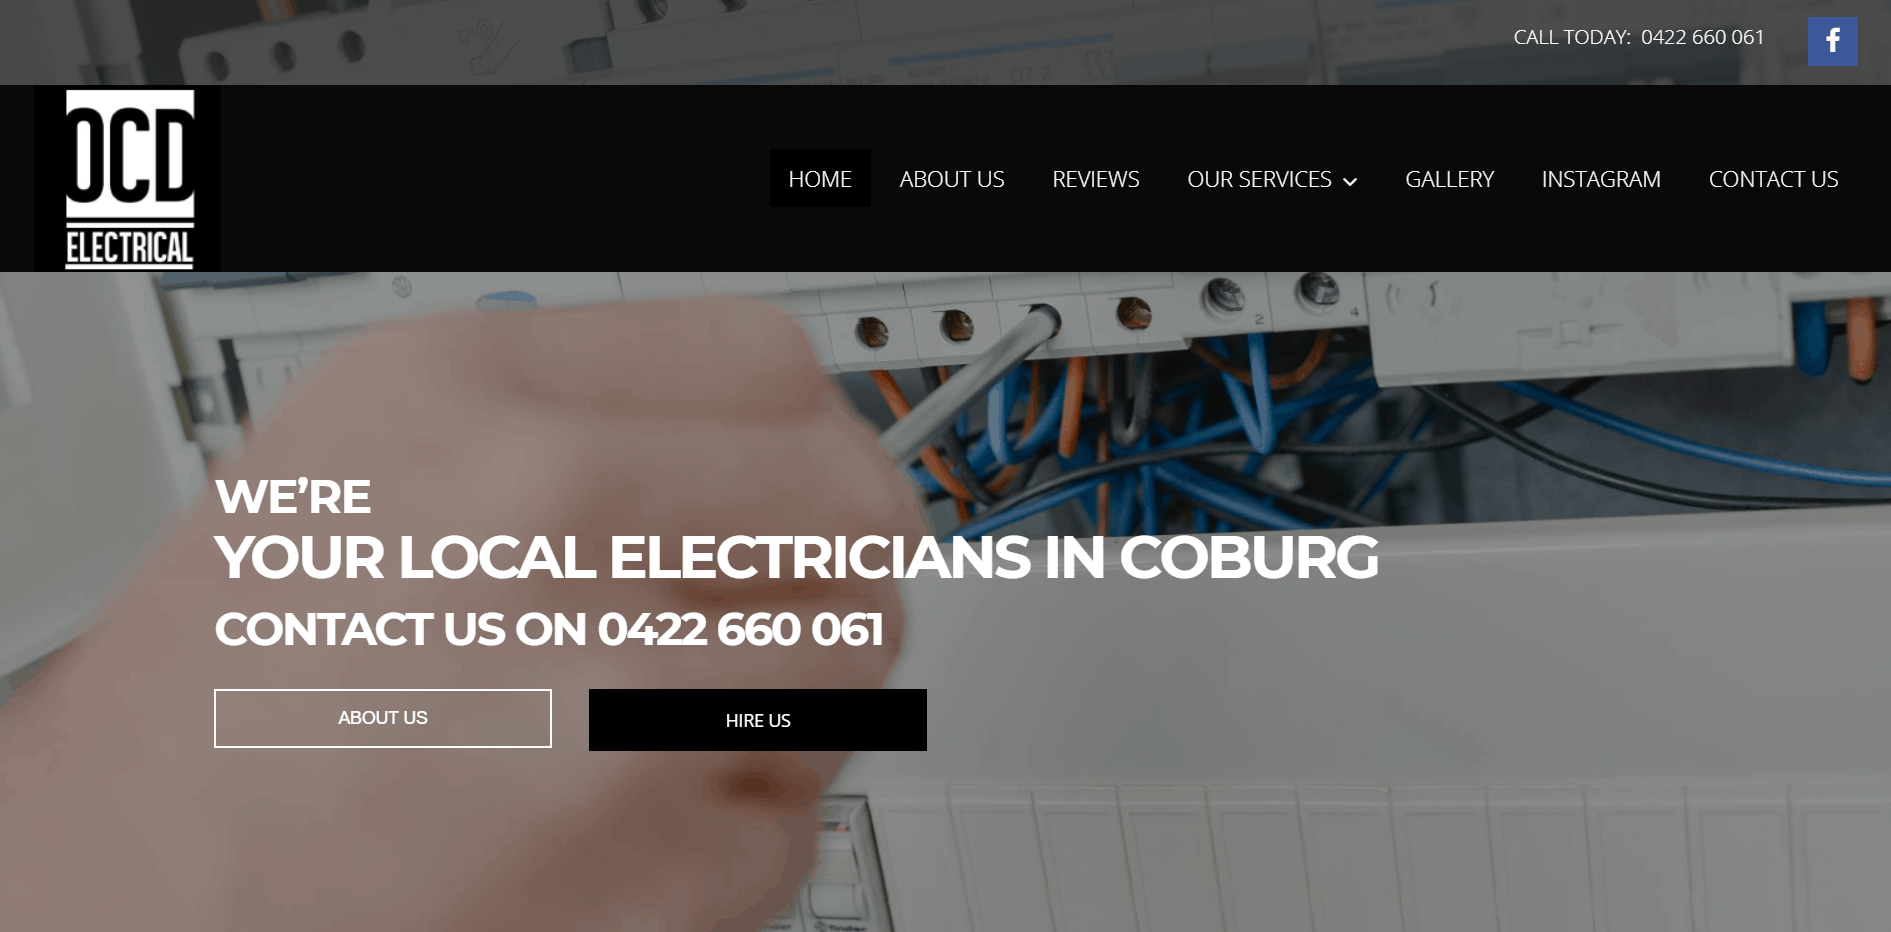 Ocd Electrical